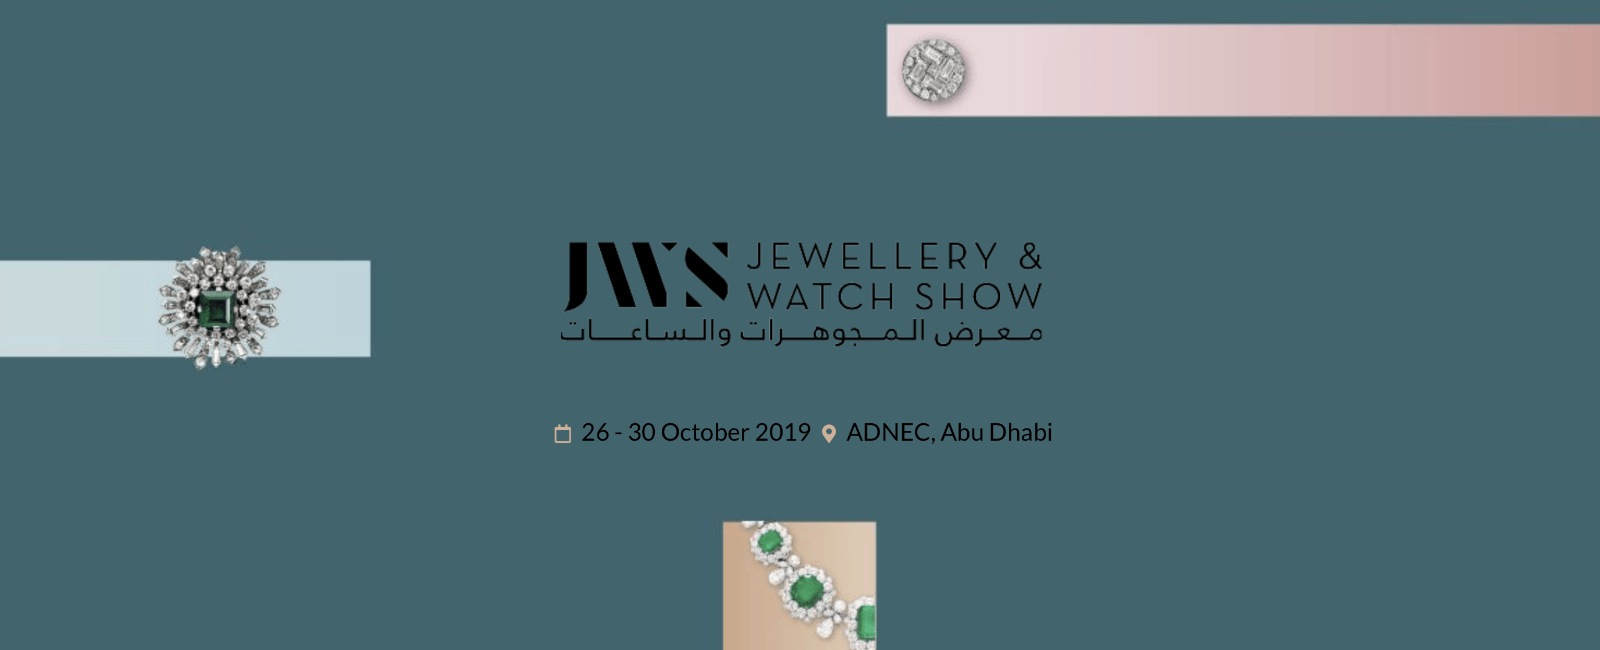 Jewellery and Watch Show Abu Dhabi - Coming Soon in UAE